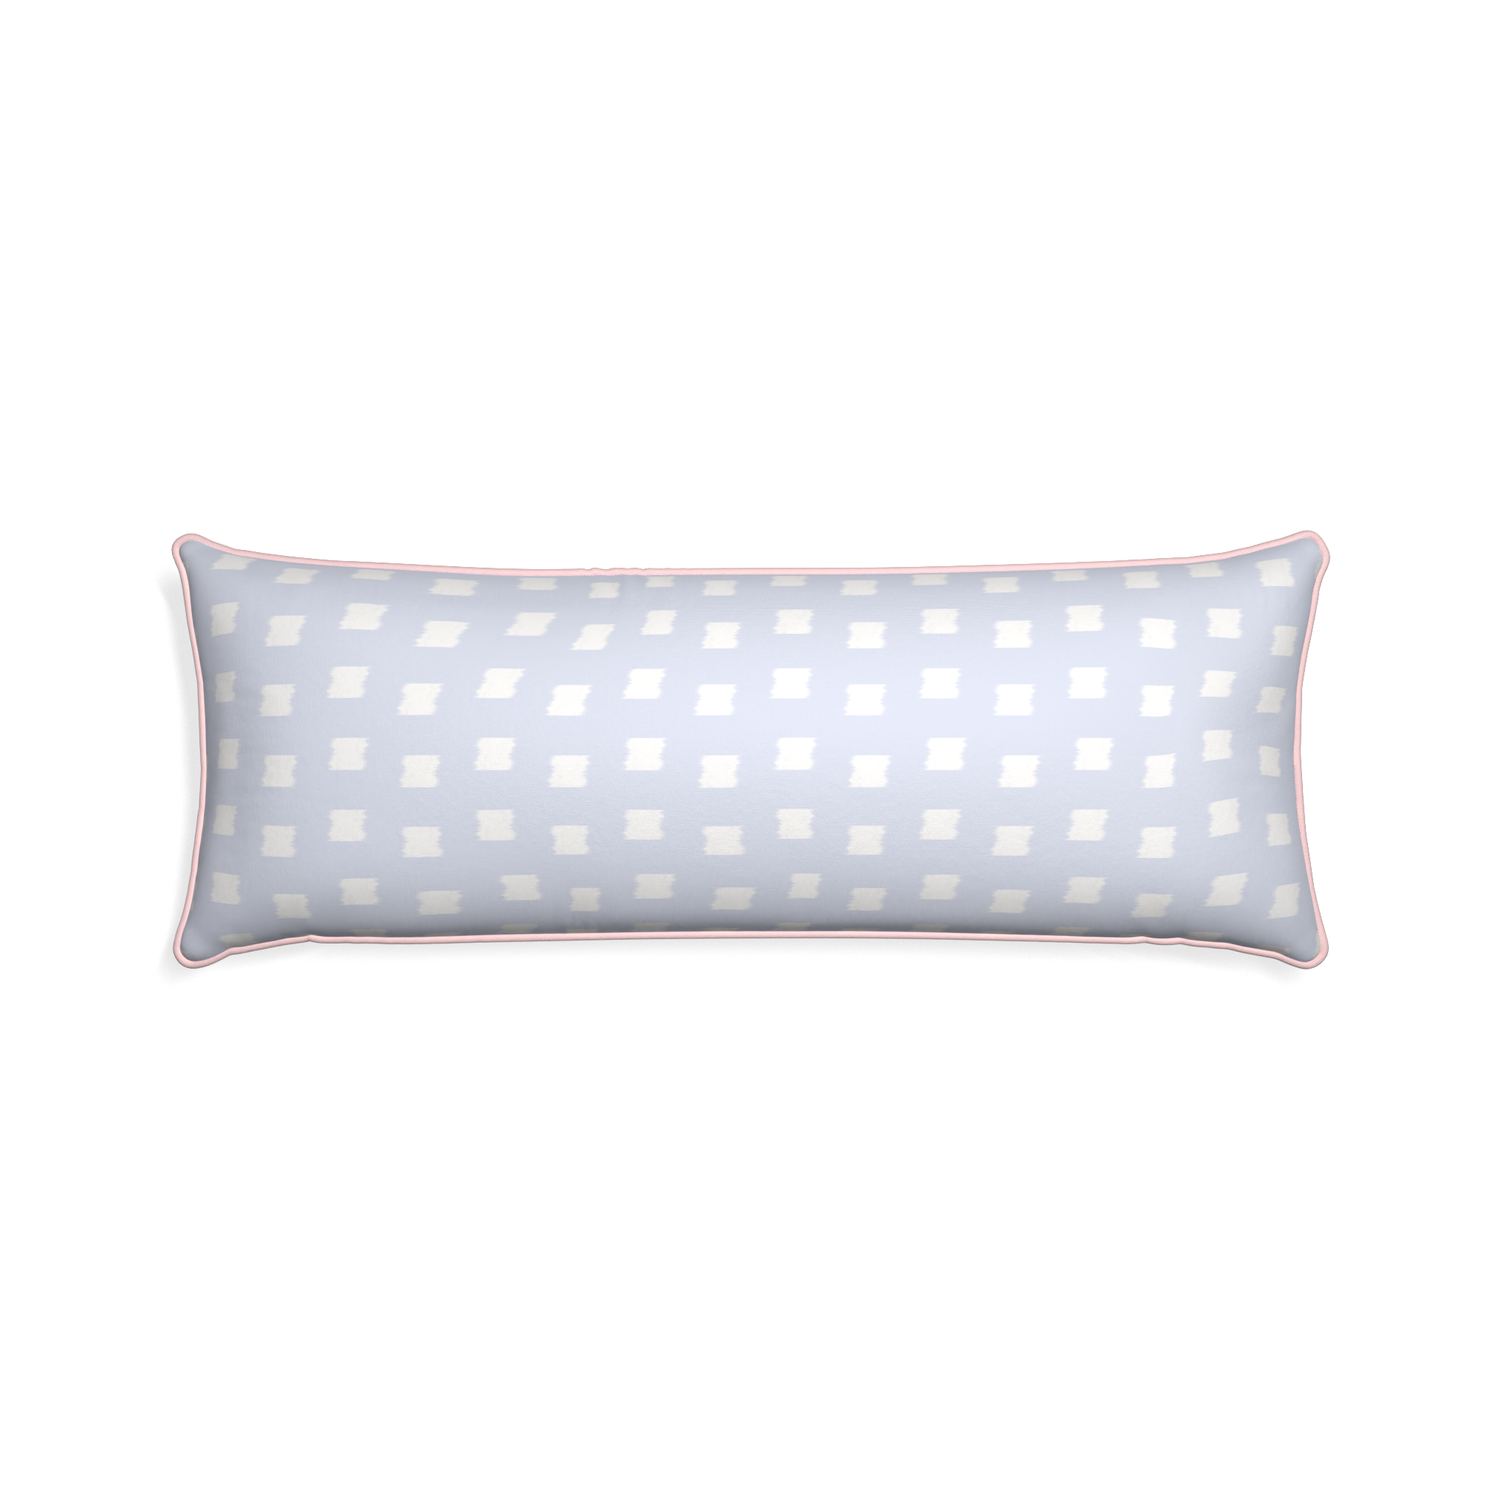 Xl-lumbar denton custom pillow with petal piping on white background